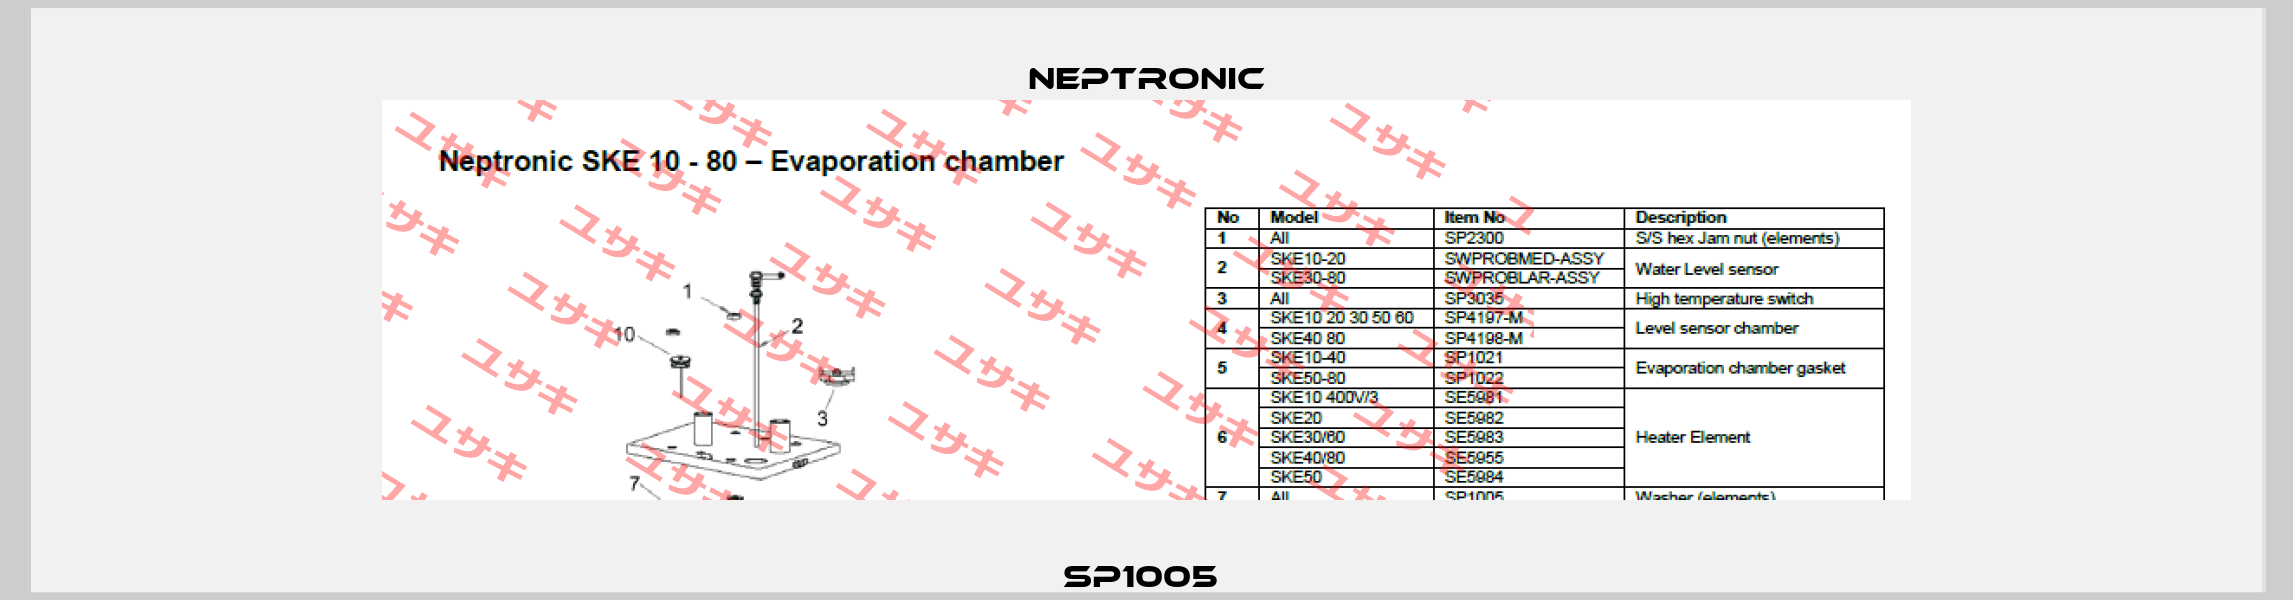 SP1005  Neptronic